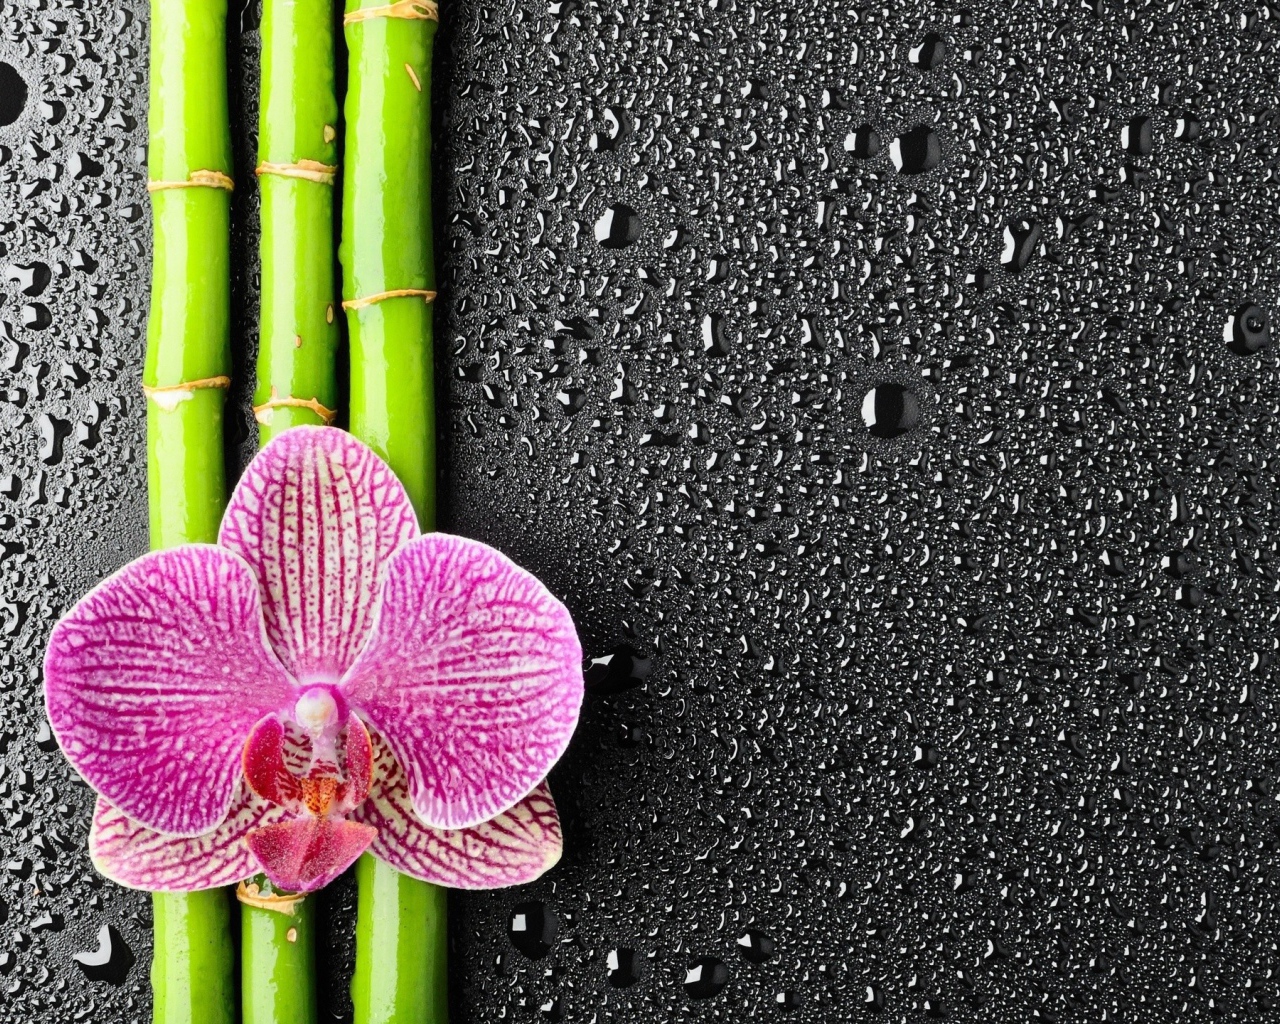 Орхидея на бамбуковых палочках